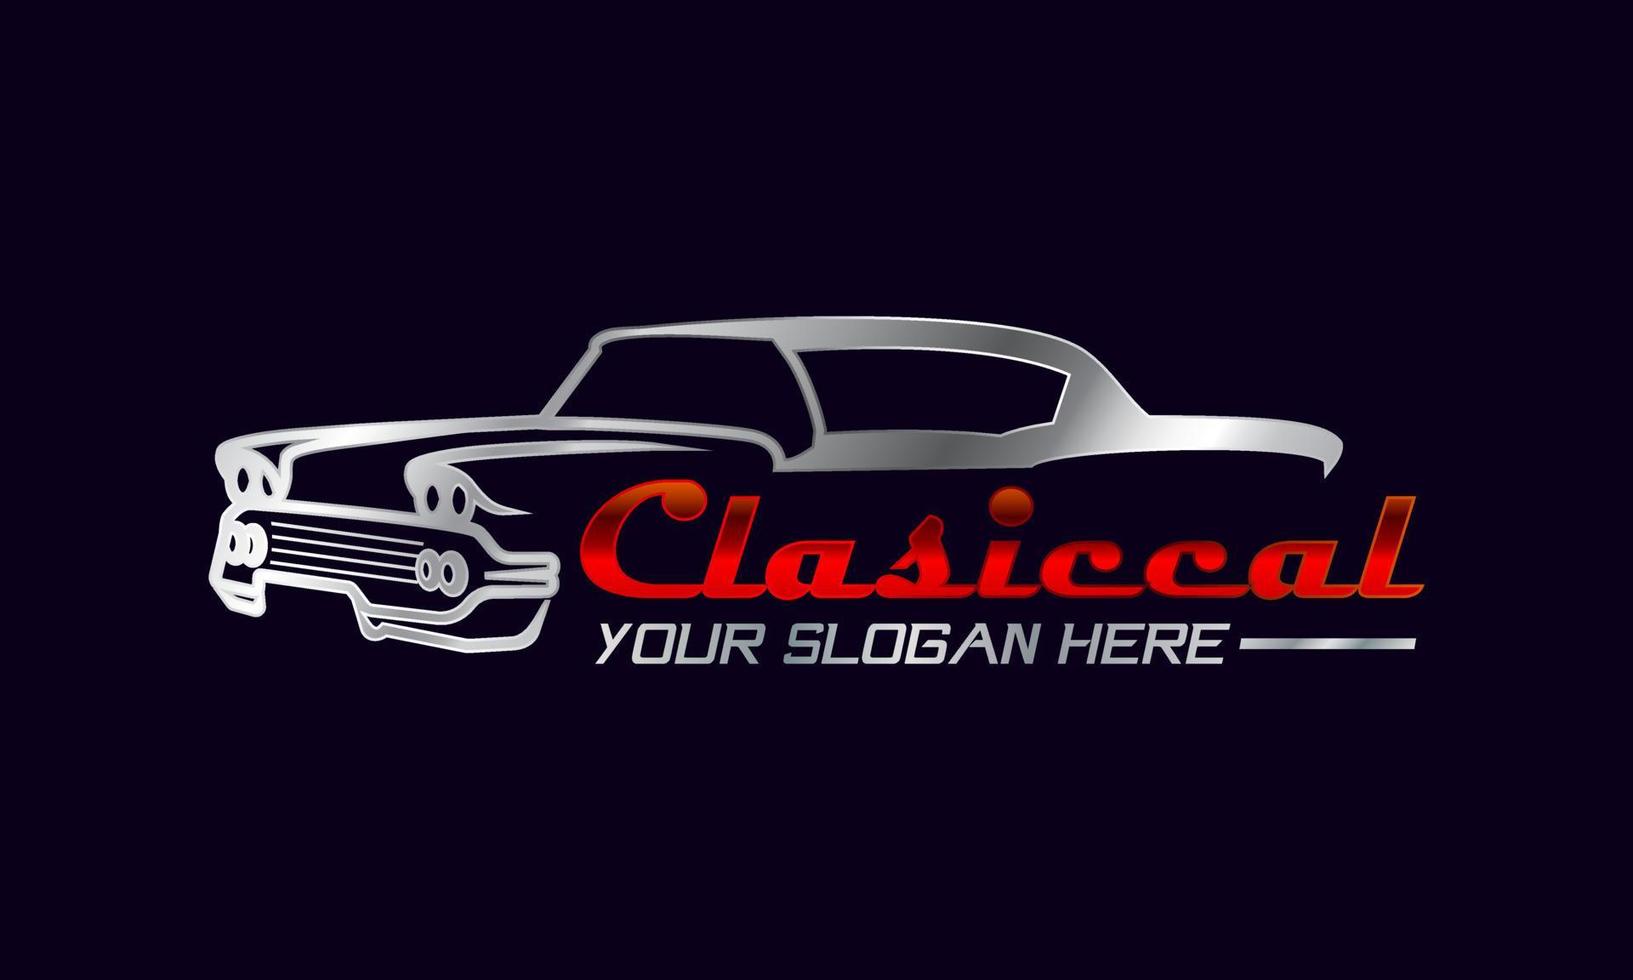 Classical Car logo vector Premium Vector. Automotive Logo Vector Template. Glossy Car Logo design.  Auto style car logo design with concept sports vehicle icon silhouette